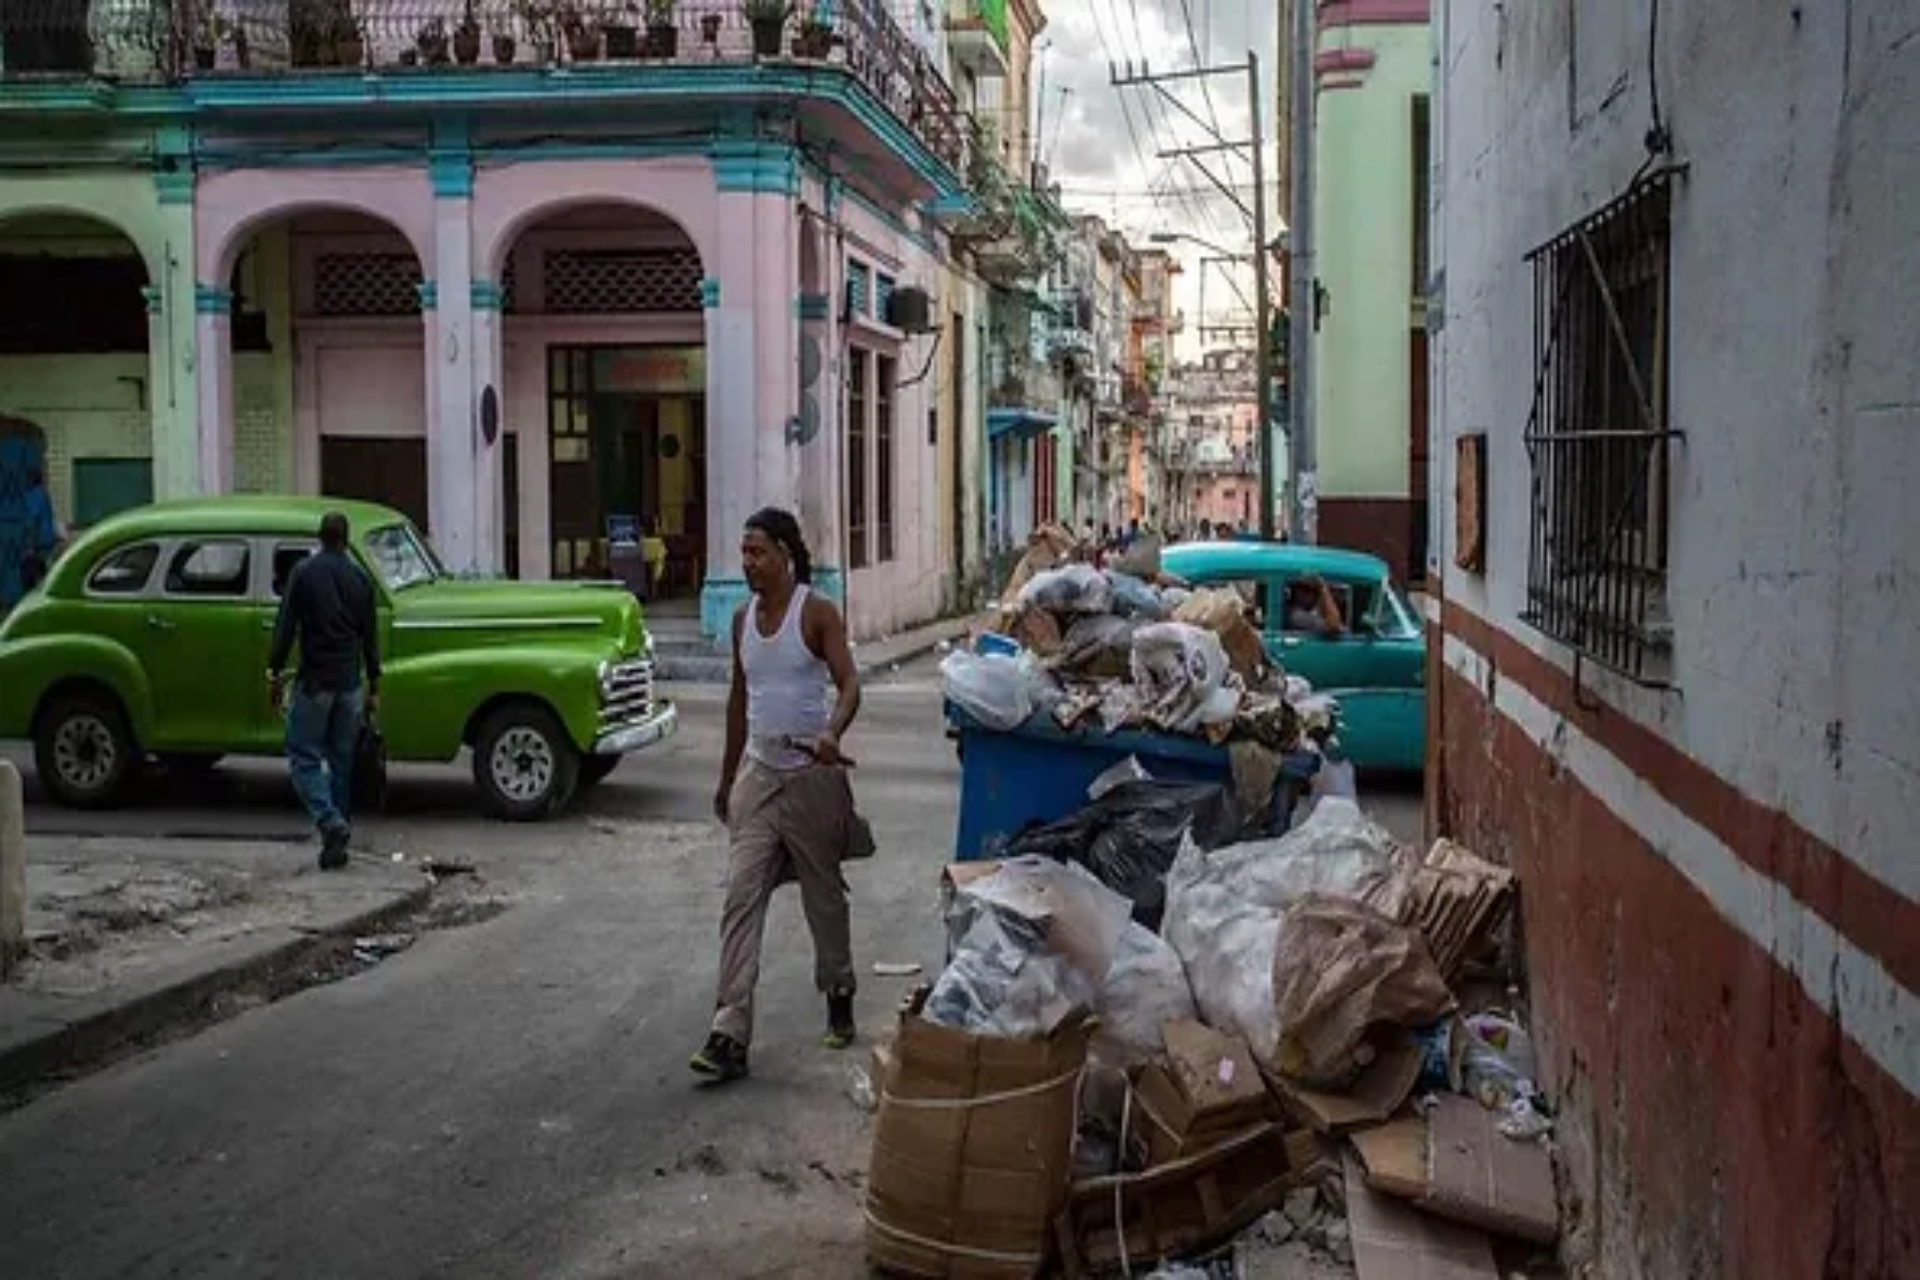 El chirrido mecánico de la cultura cubana